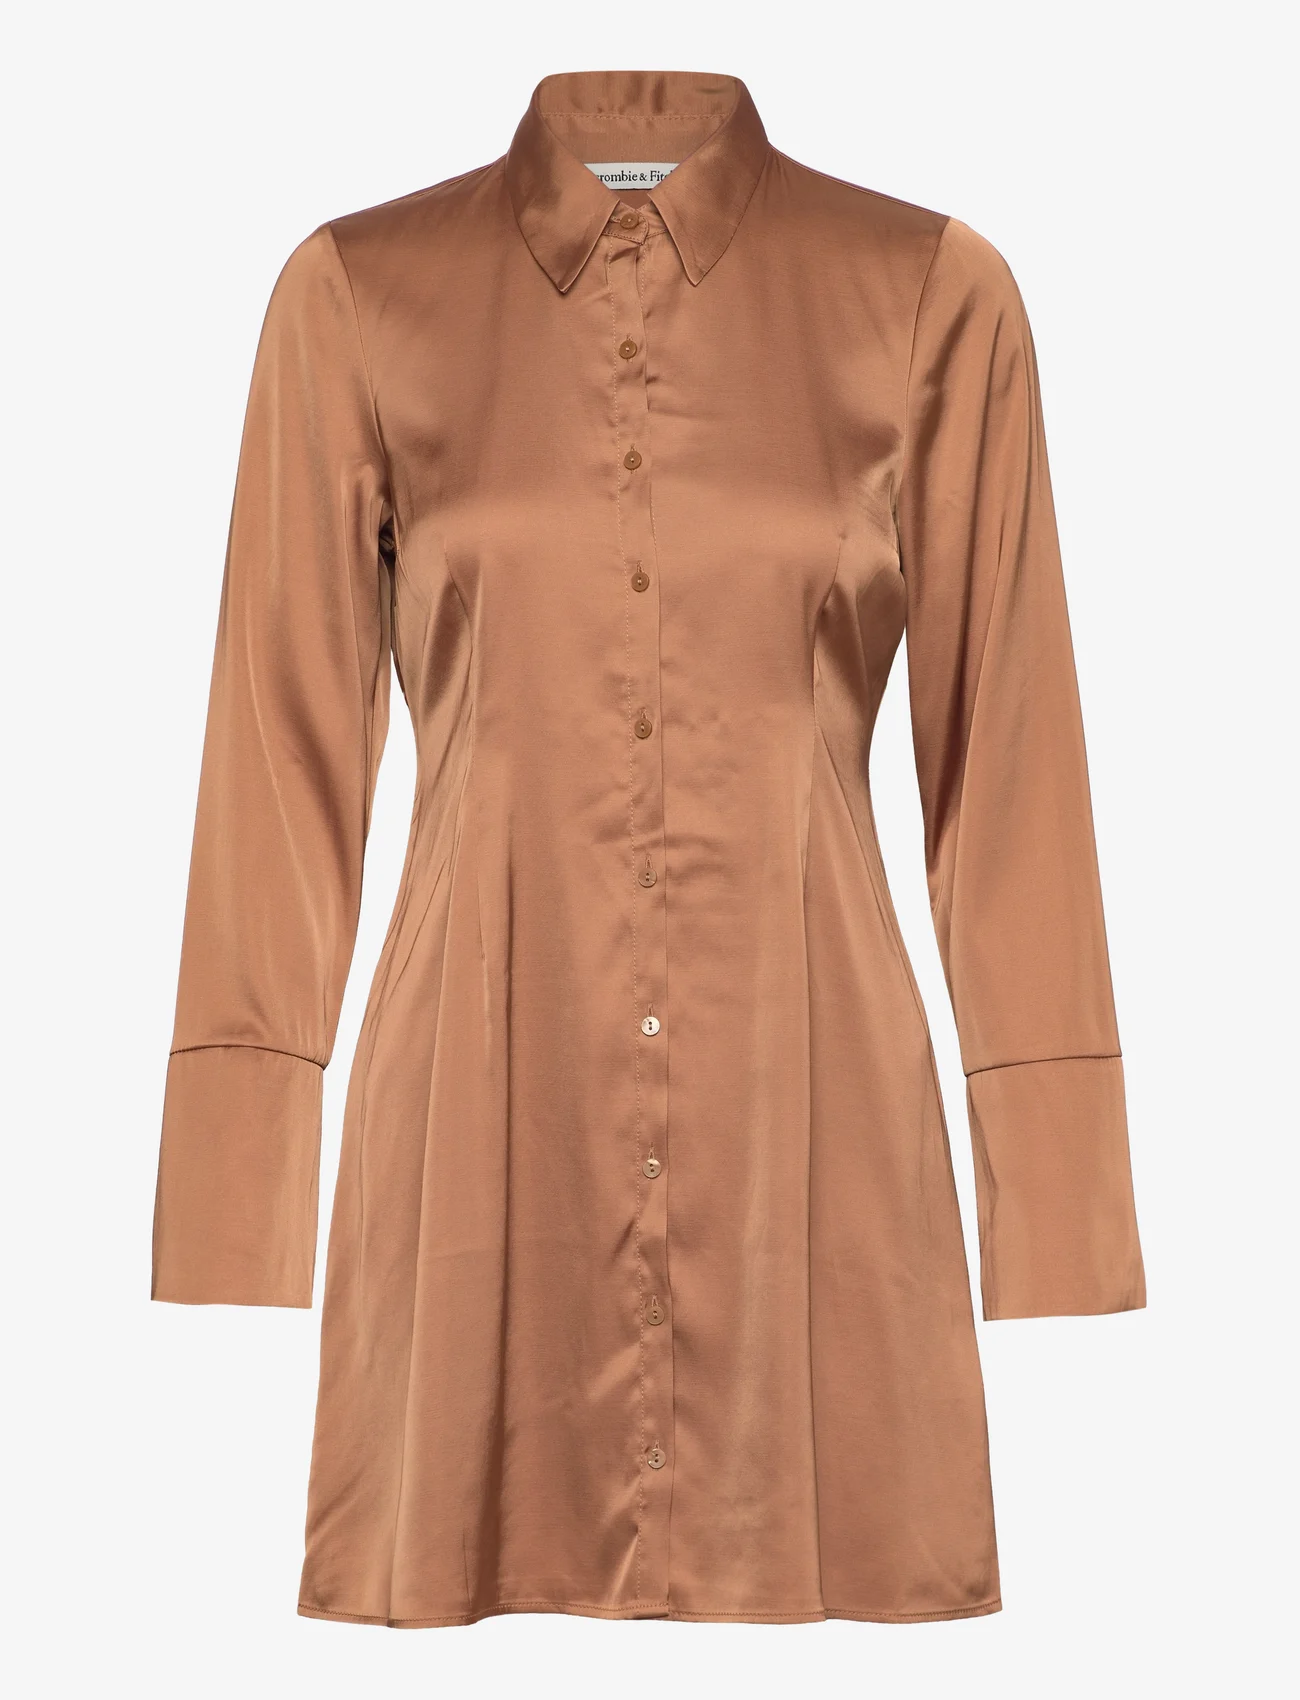 Abercrombie & Fitch - ANF WOMENS DRESSES - kreklkleitas - brown - 0